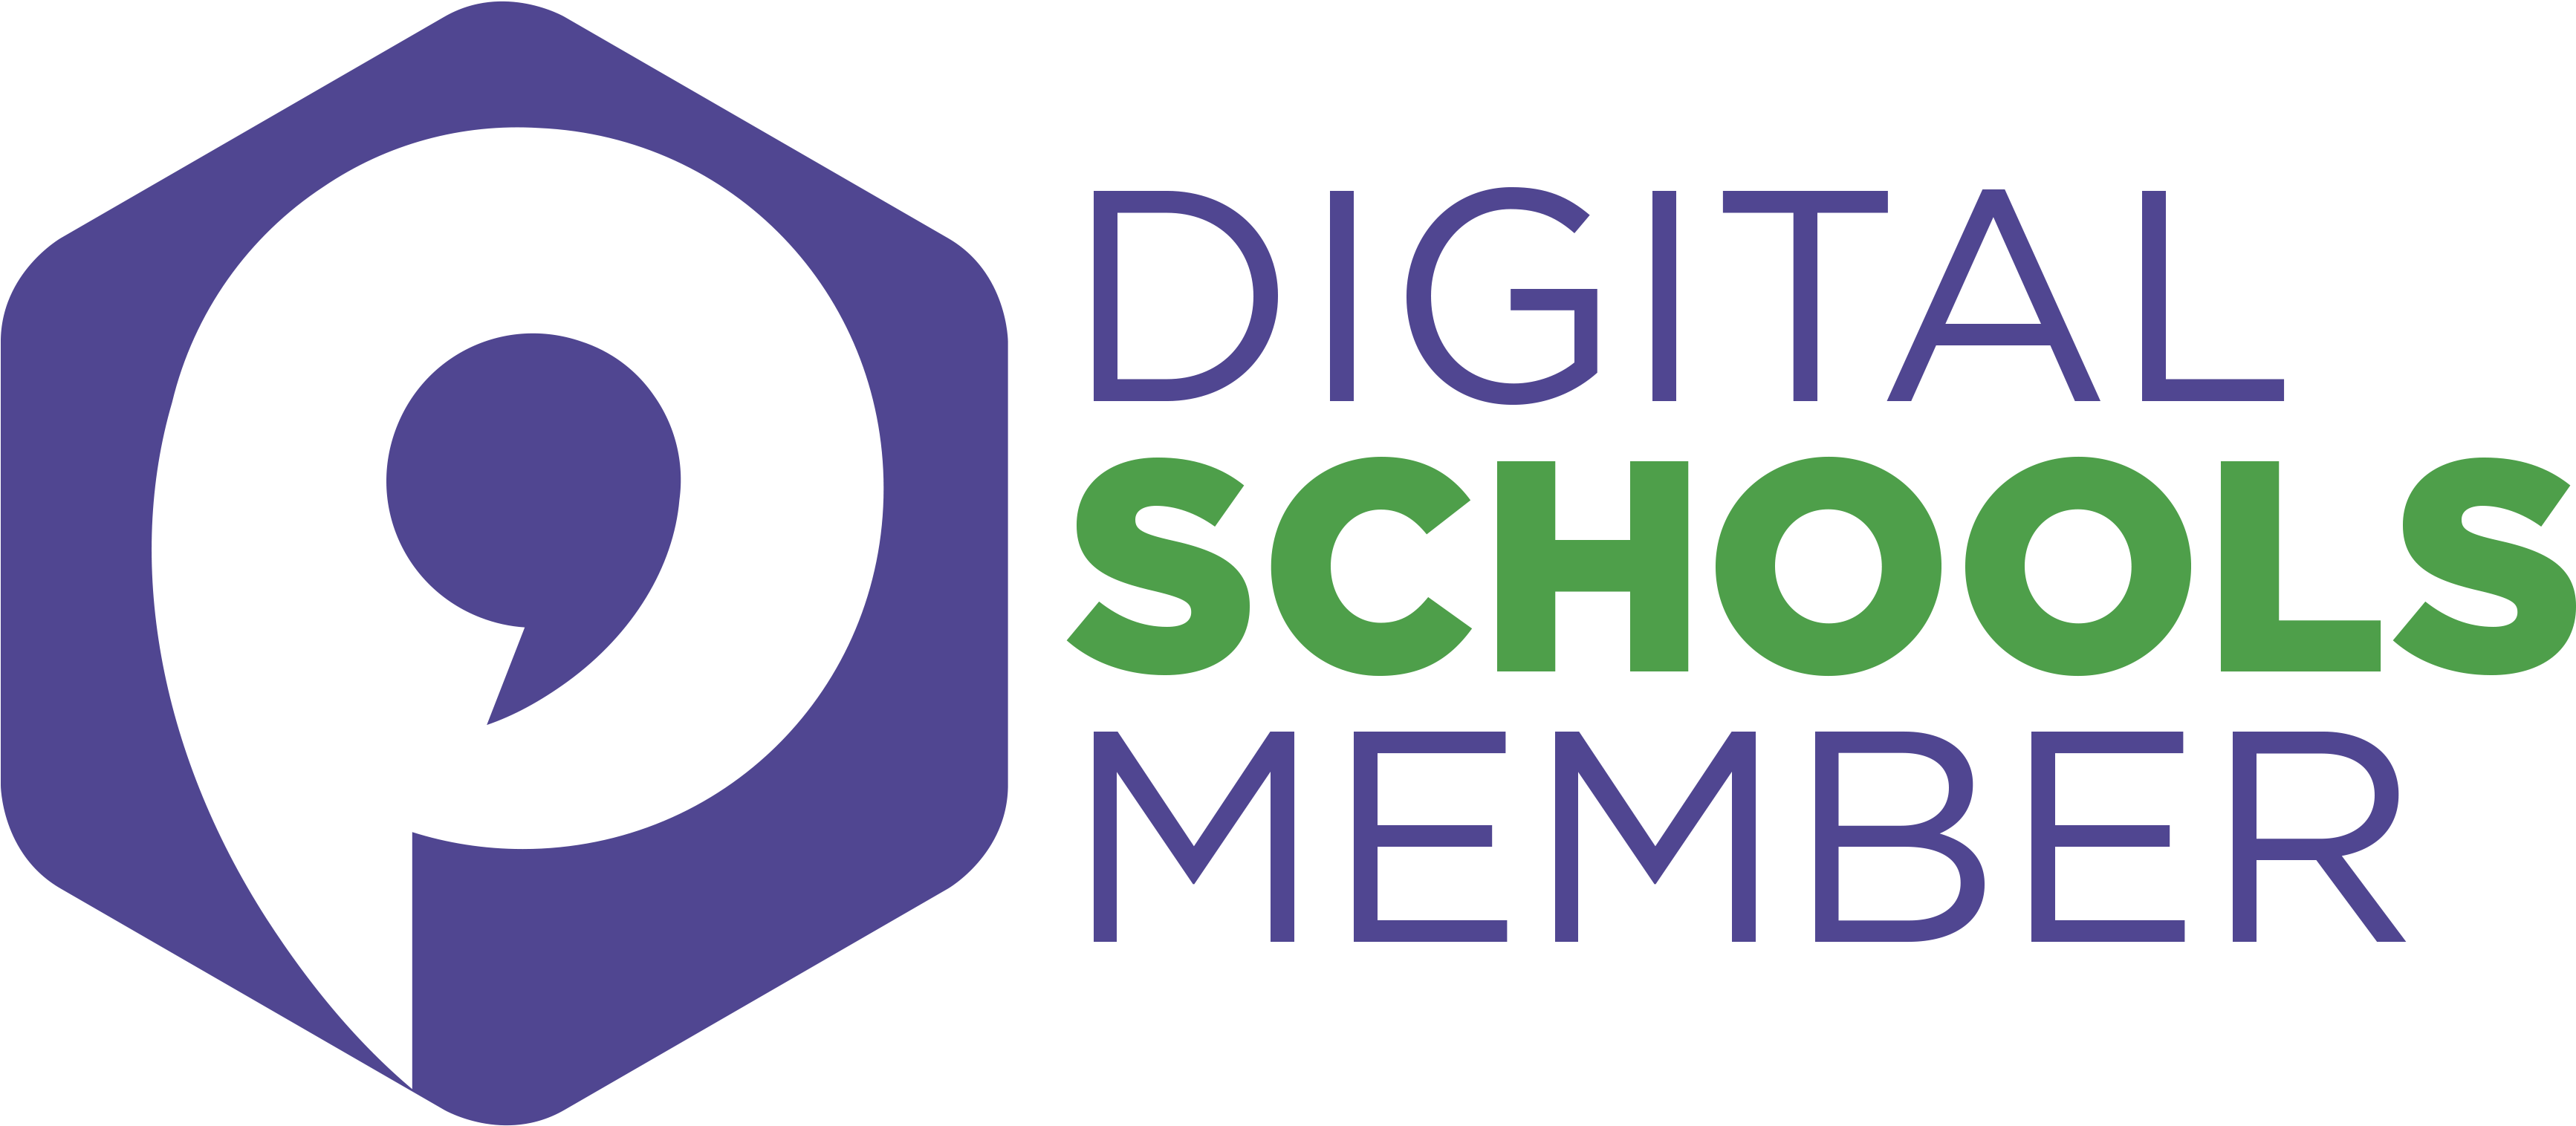 Img - Digital Schools Member (3491x1565)